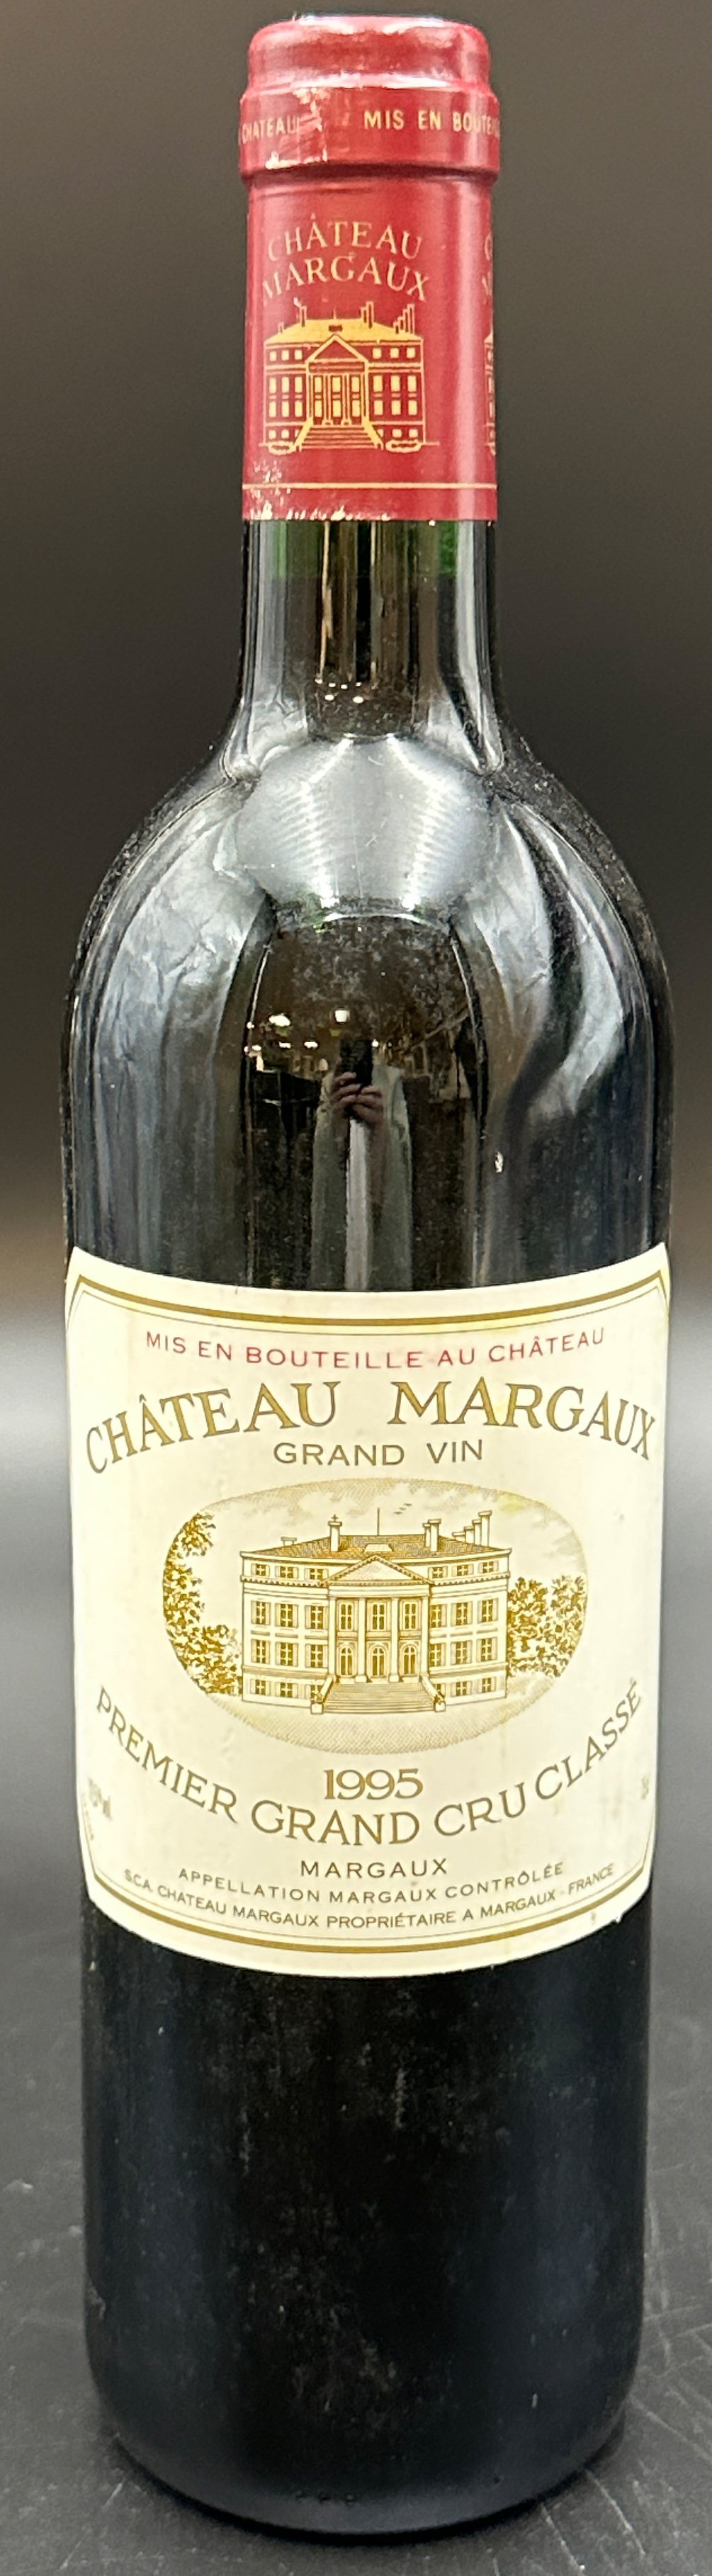 1 bottle of red wine. Château Margaux. Premier Grand Cru Classe. 1995. France.